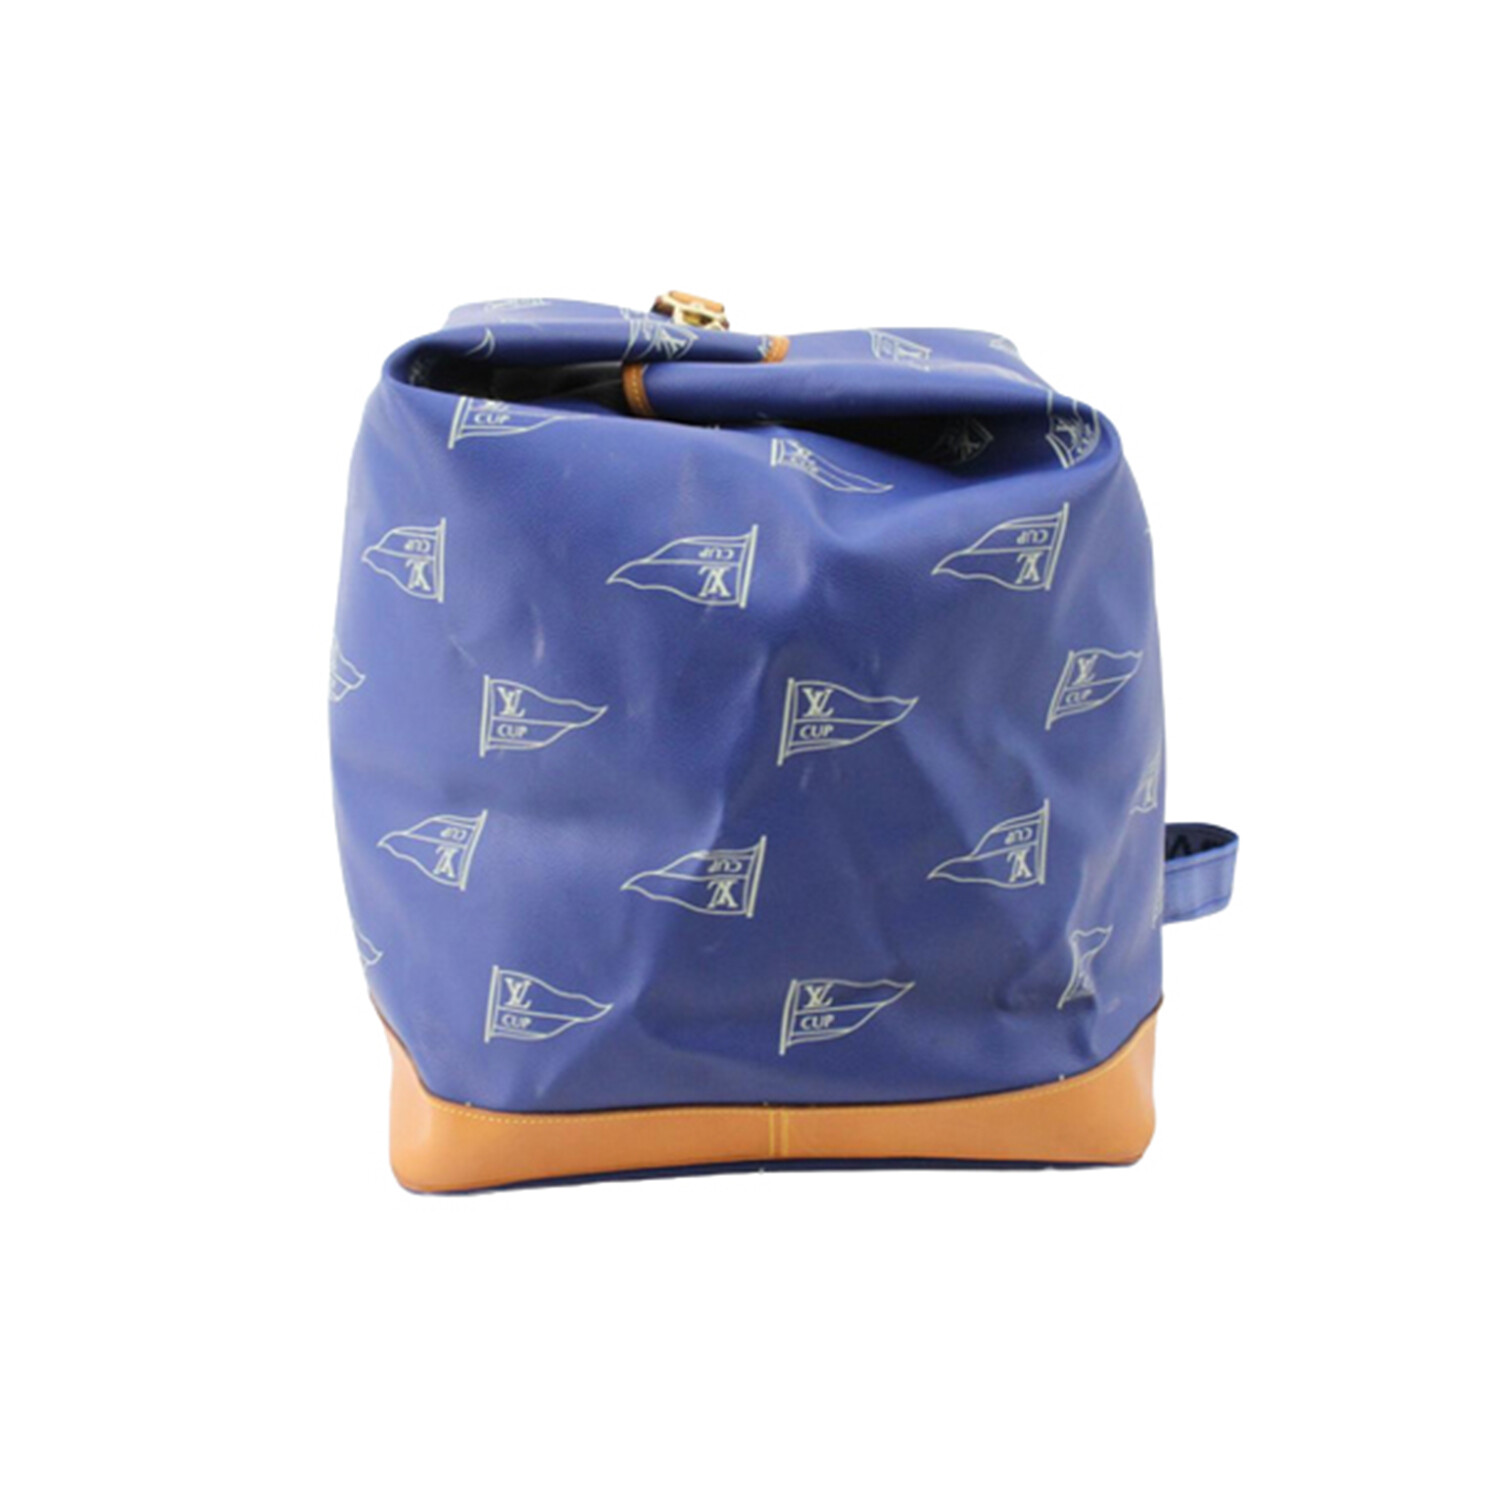 Louis Vuitton trunk messenger bag in blue canvas with monogram